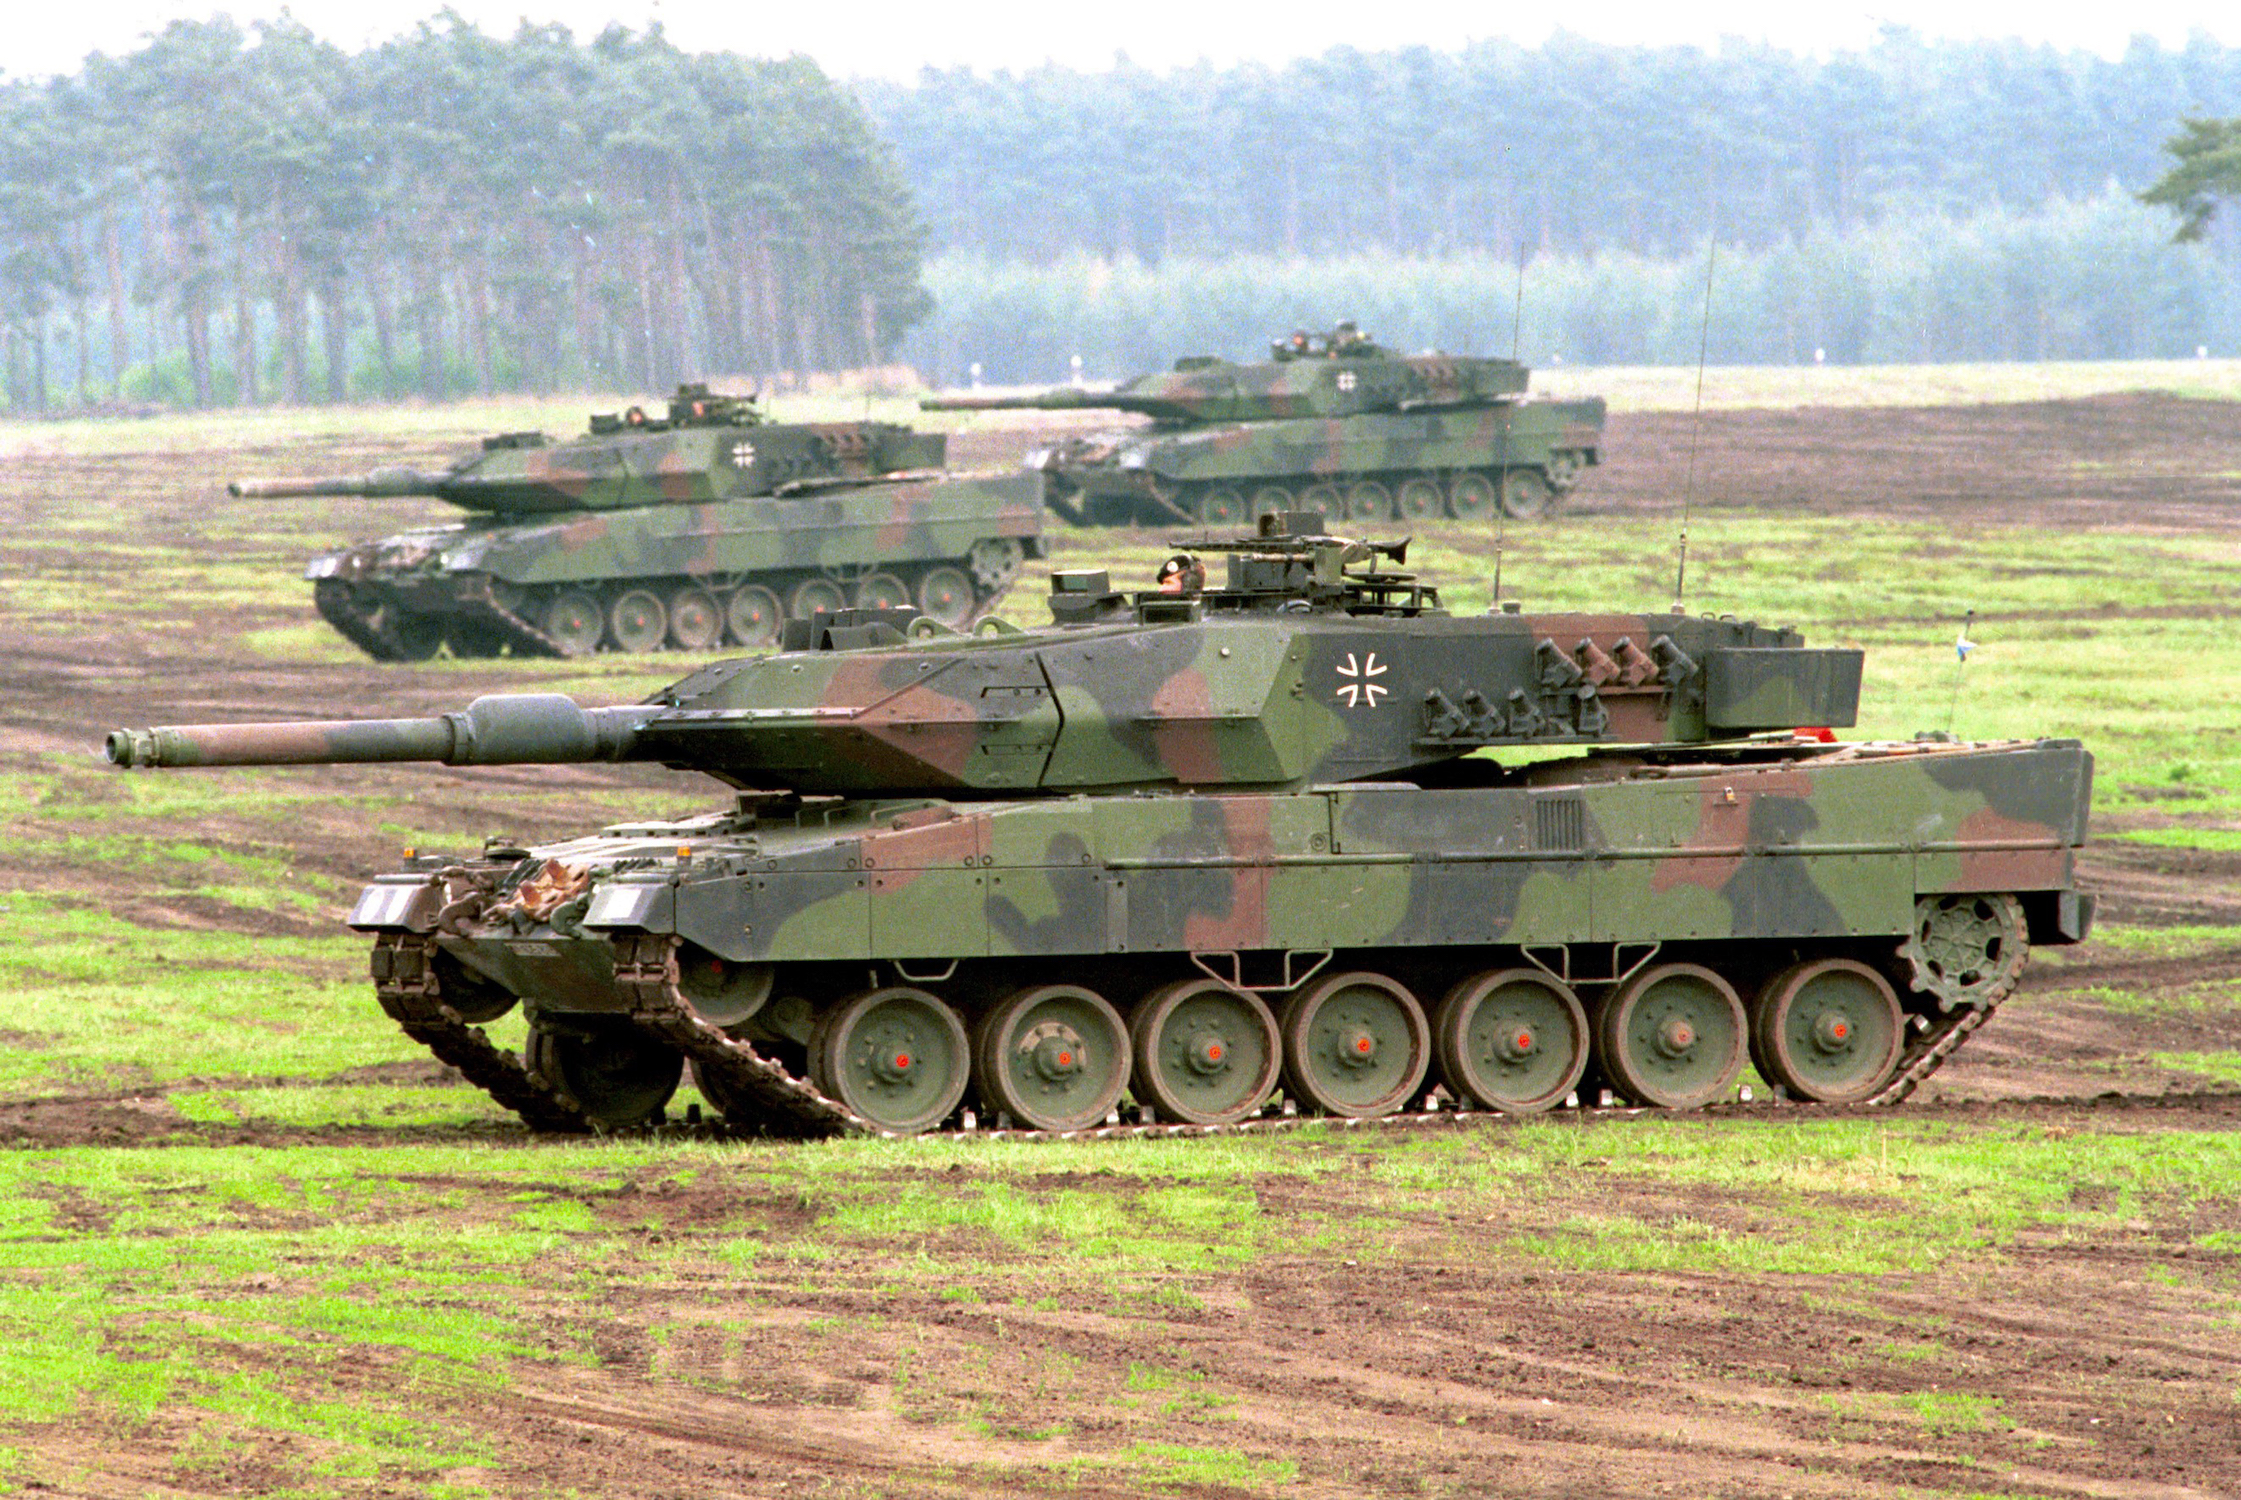 German Leopard 2 tanks